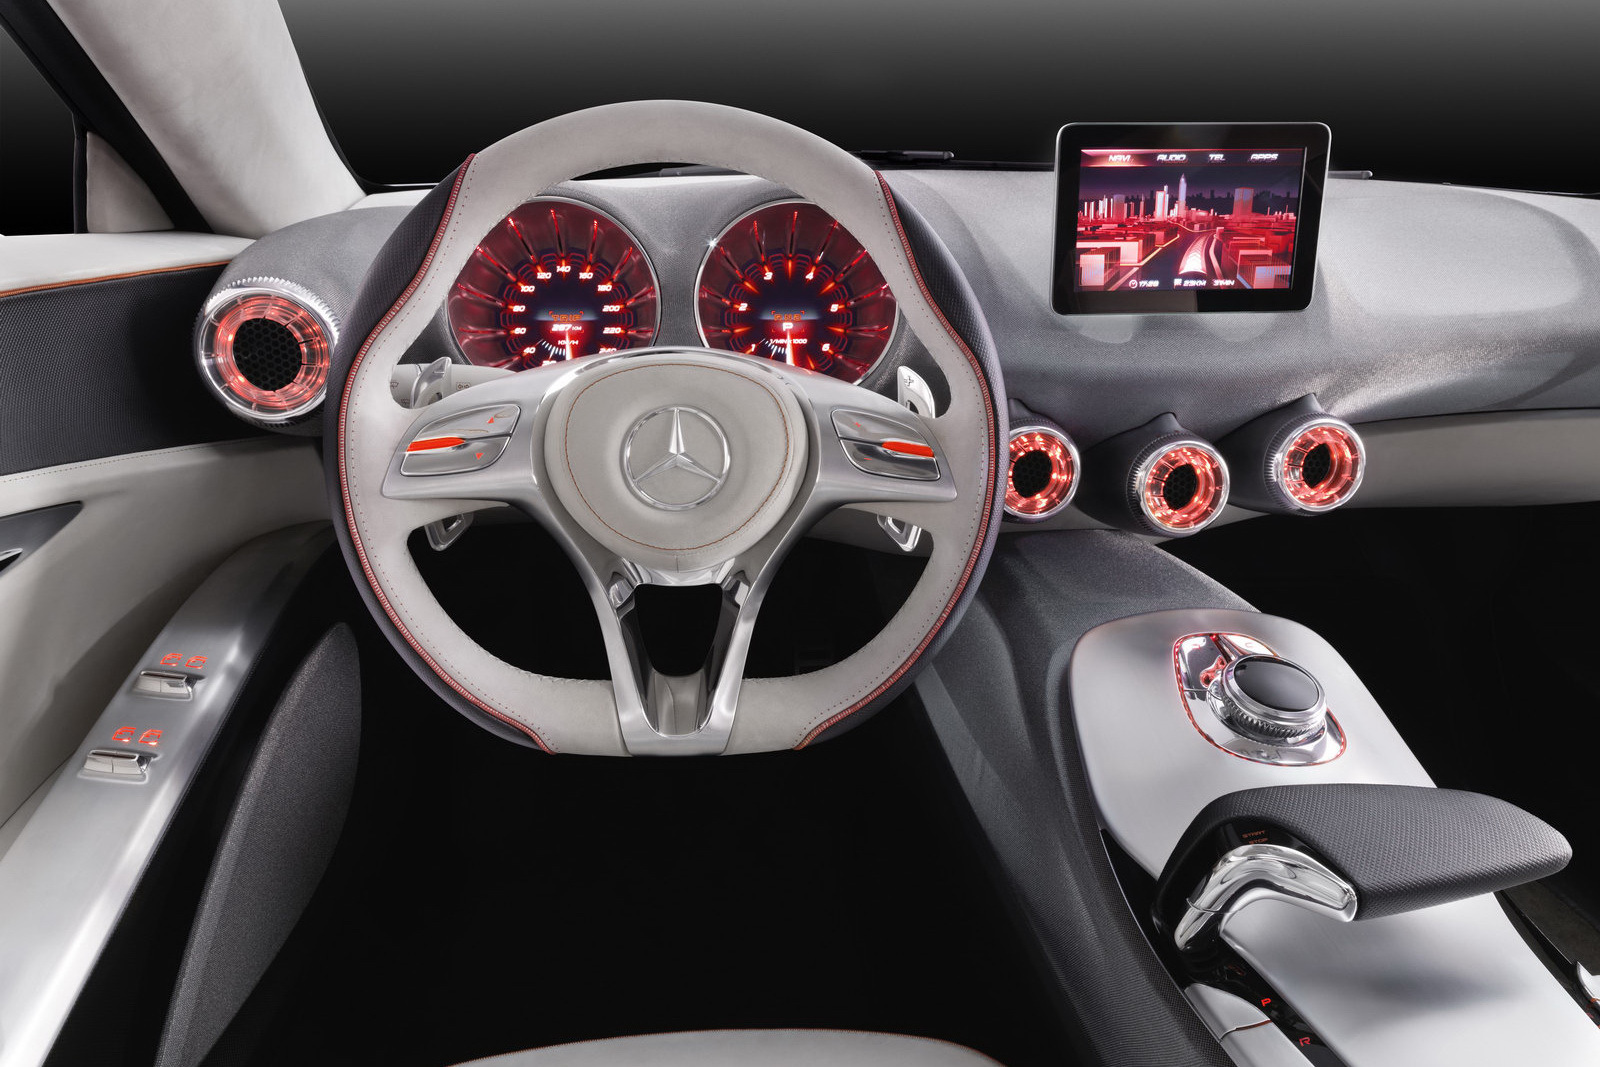 Interiorul lui Mercedes-Benz A-Class Concept este simplist, dar high-tech